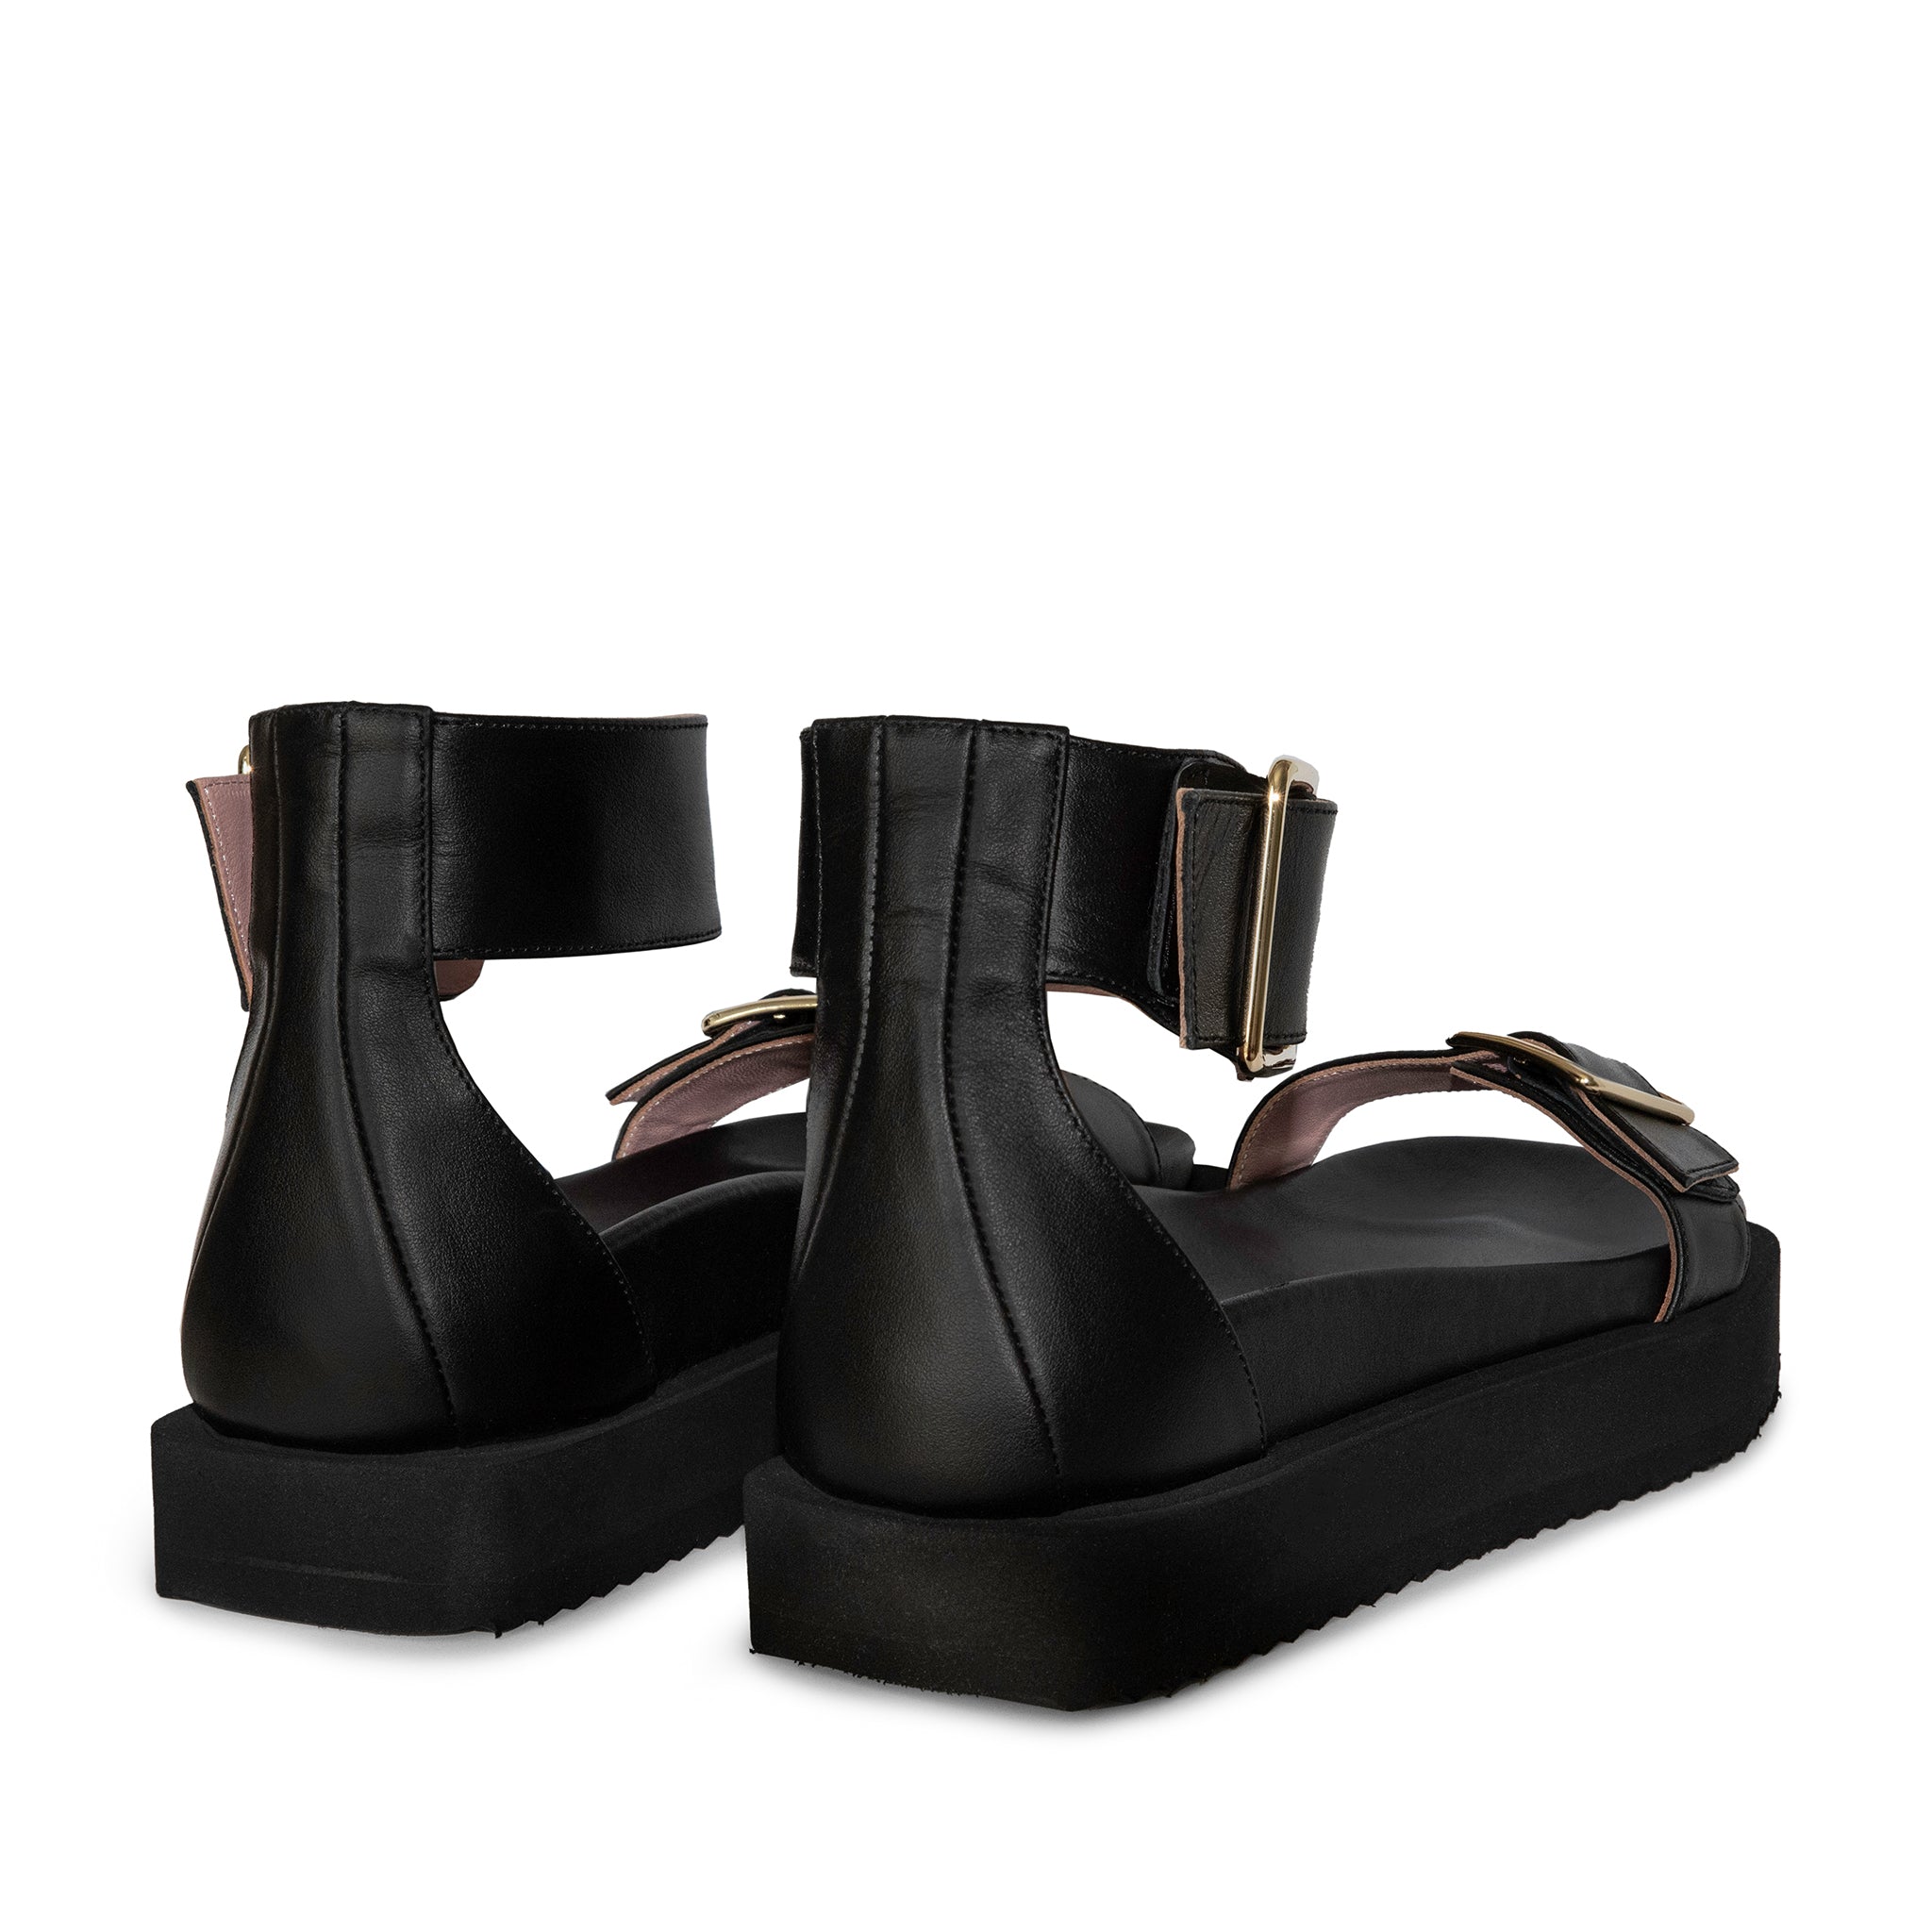 Maru Black Leather Sandals LES7487-BLACK-4